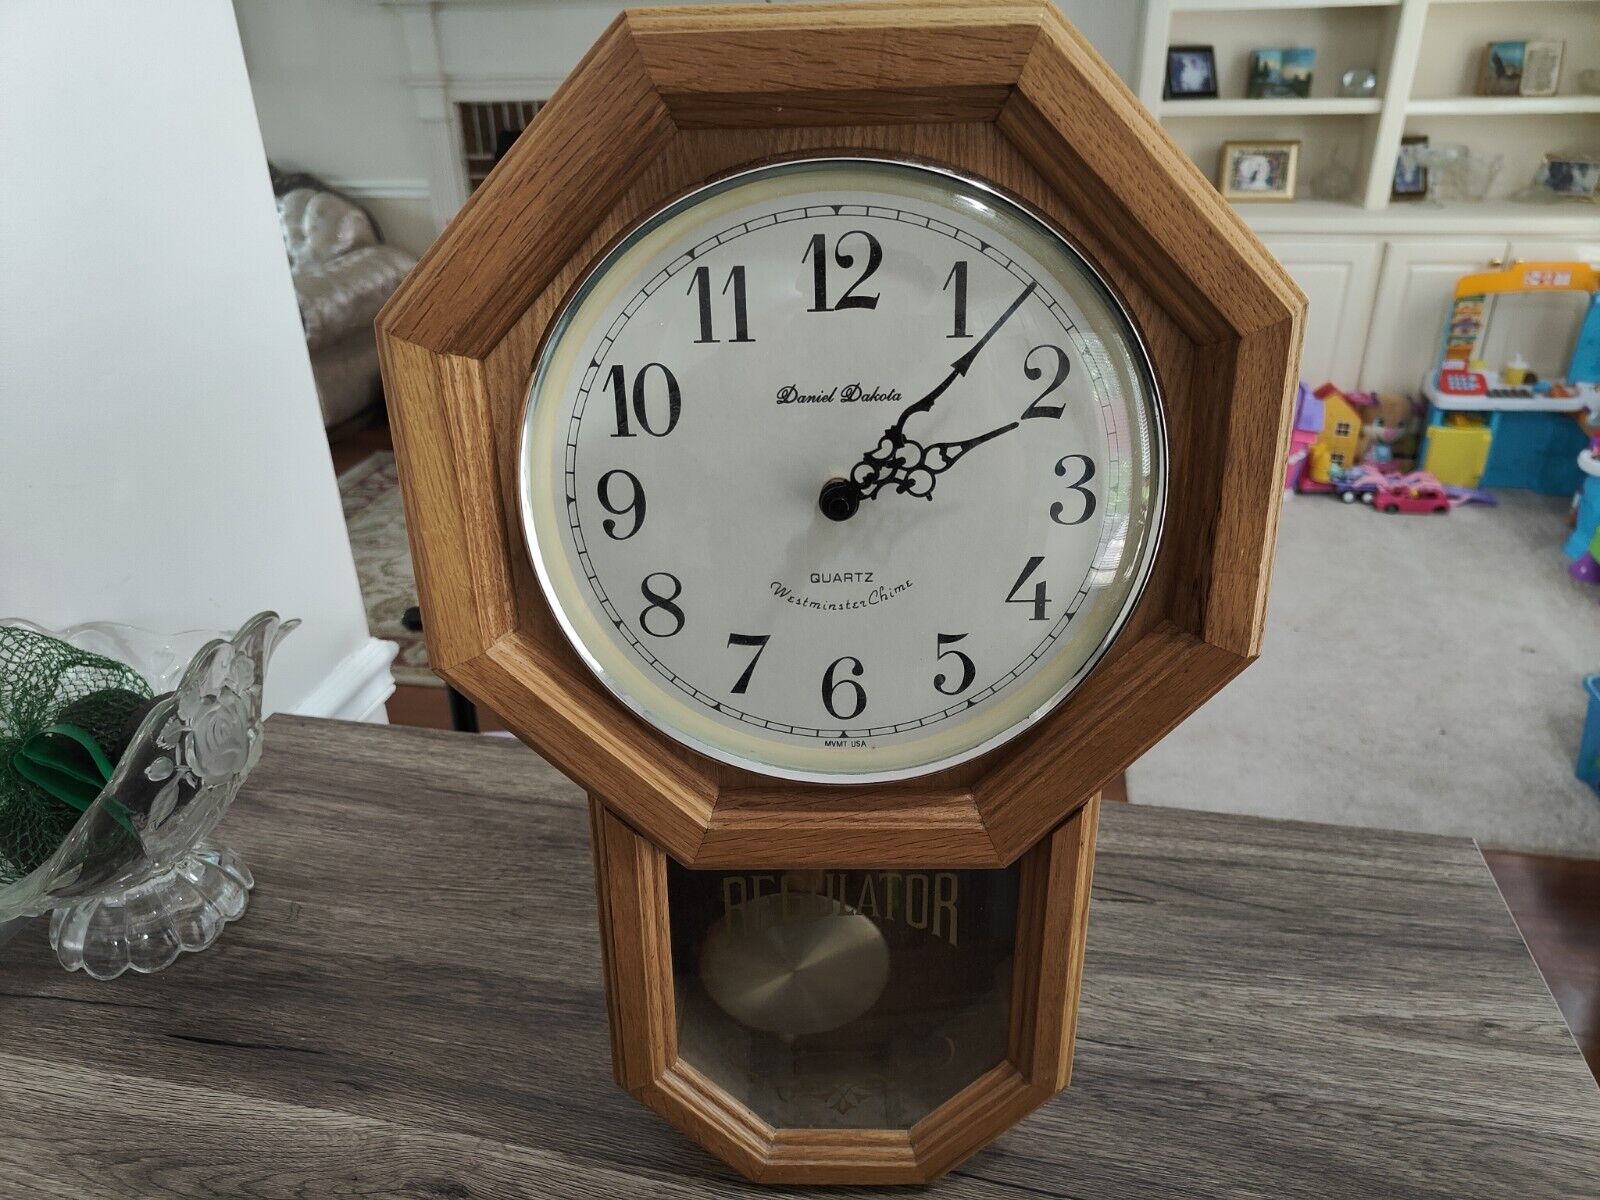 Daniel Dakota Westminster Hourly Chime Pendulum Quartz Clock Tested Working 